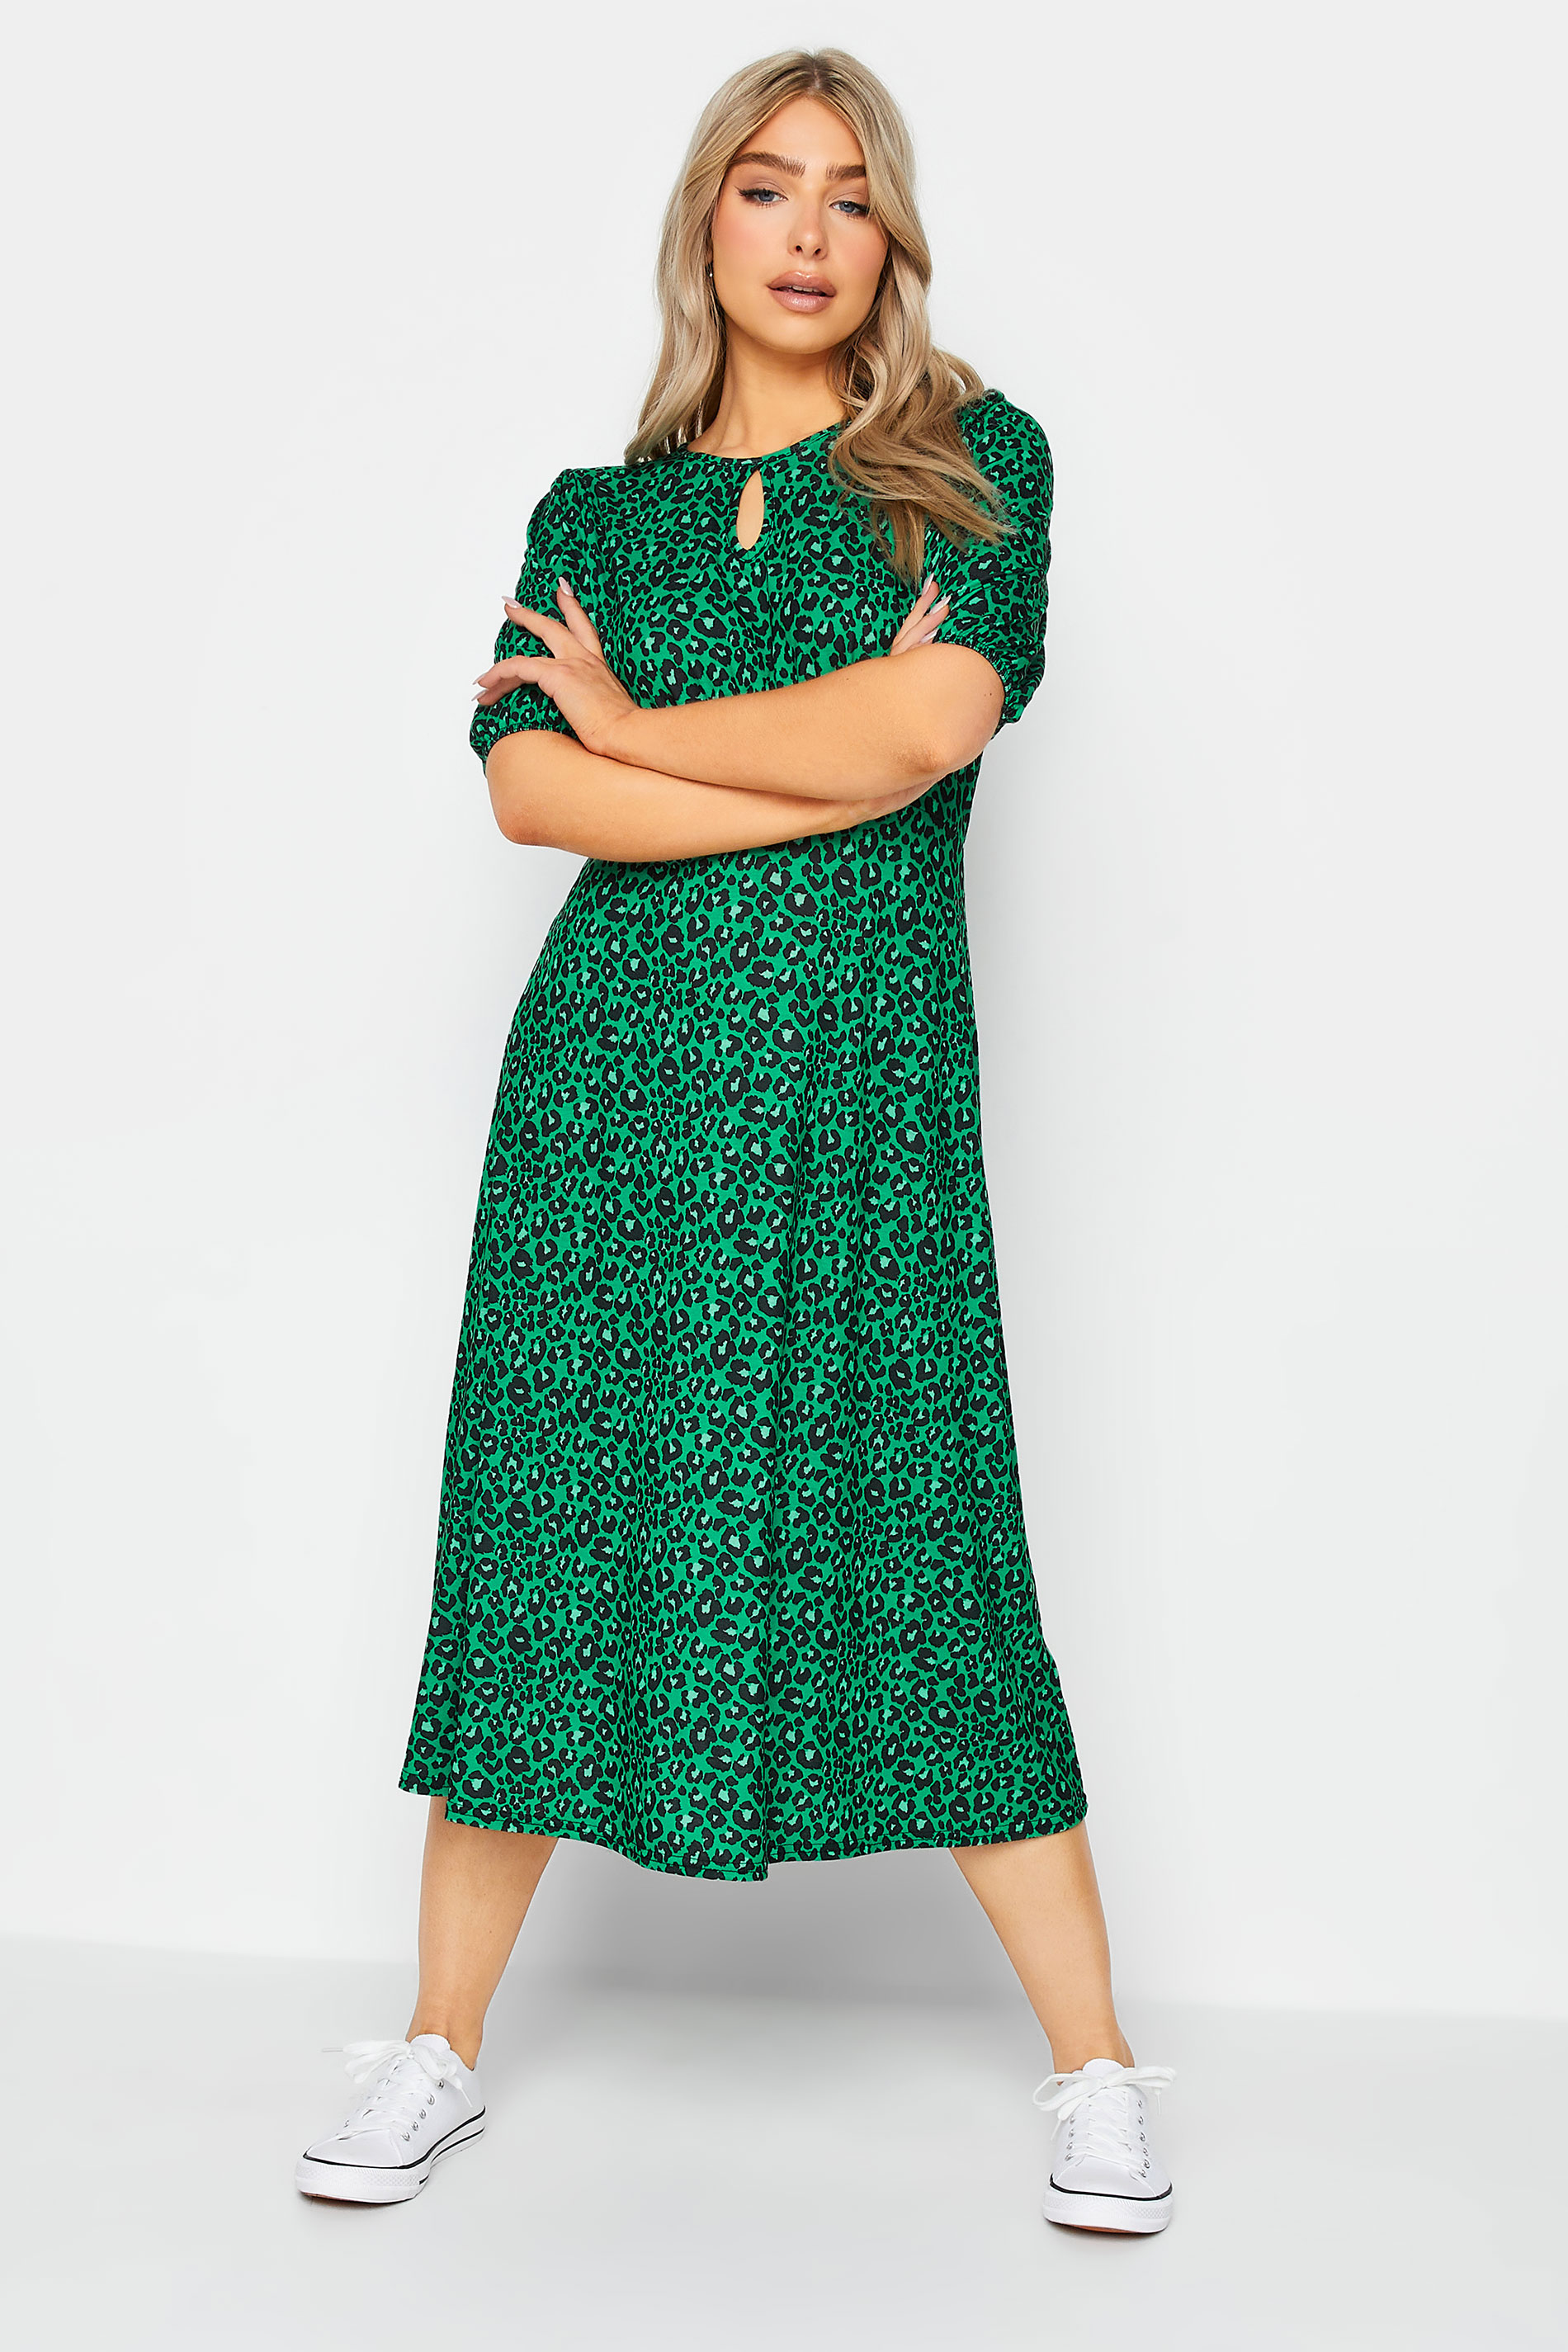 M&Co Green Leopard Print Dress | M&Co 1